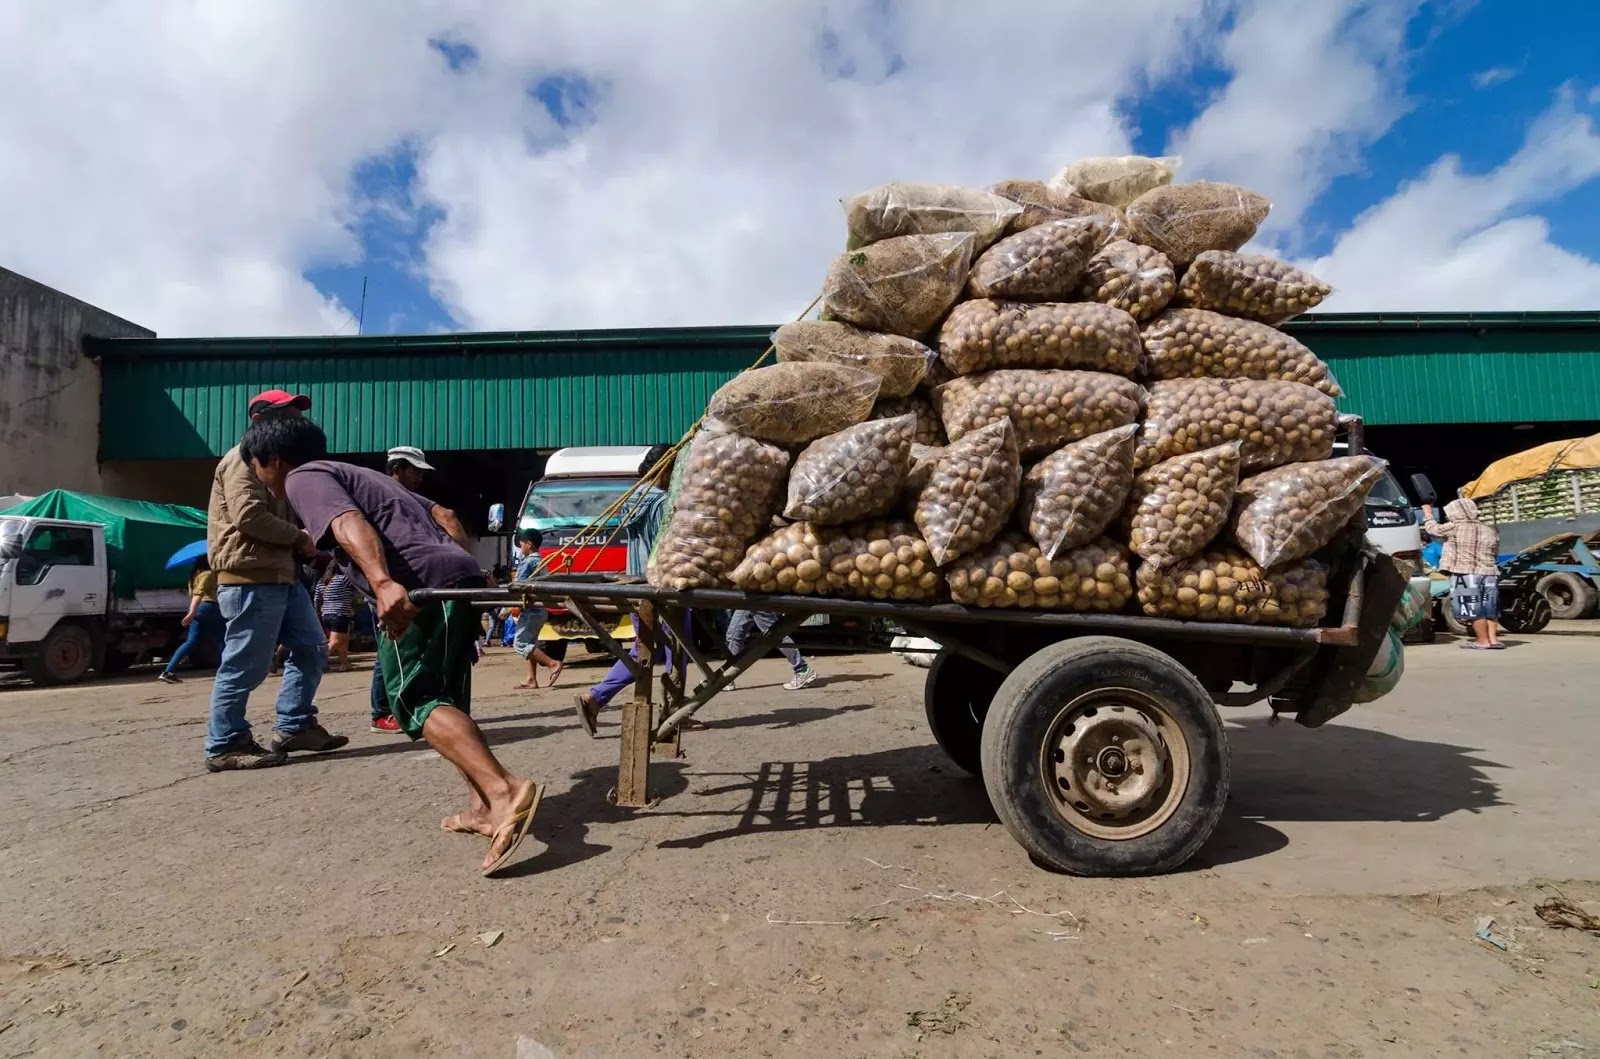 Porter Mordernized Improvised Cart Trading Post La Trinidad Benguet Cordillera Administrative Region Philippines